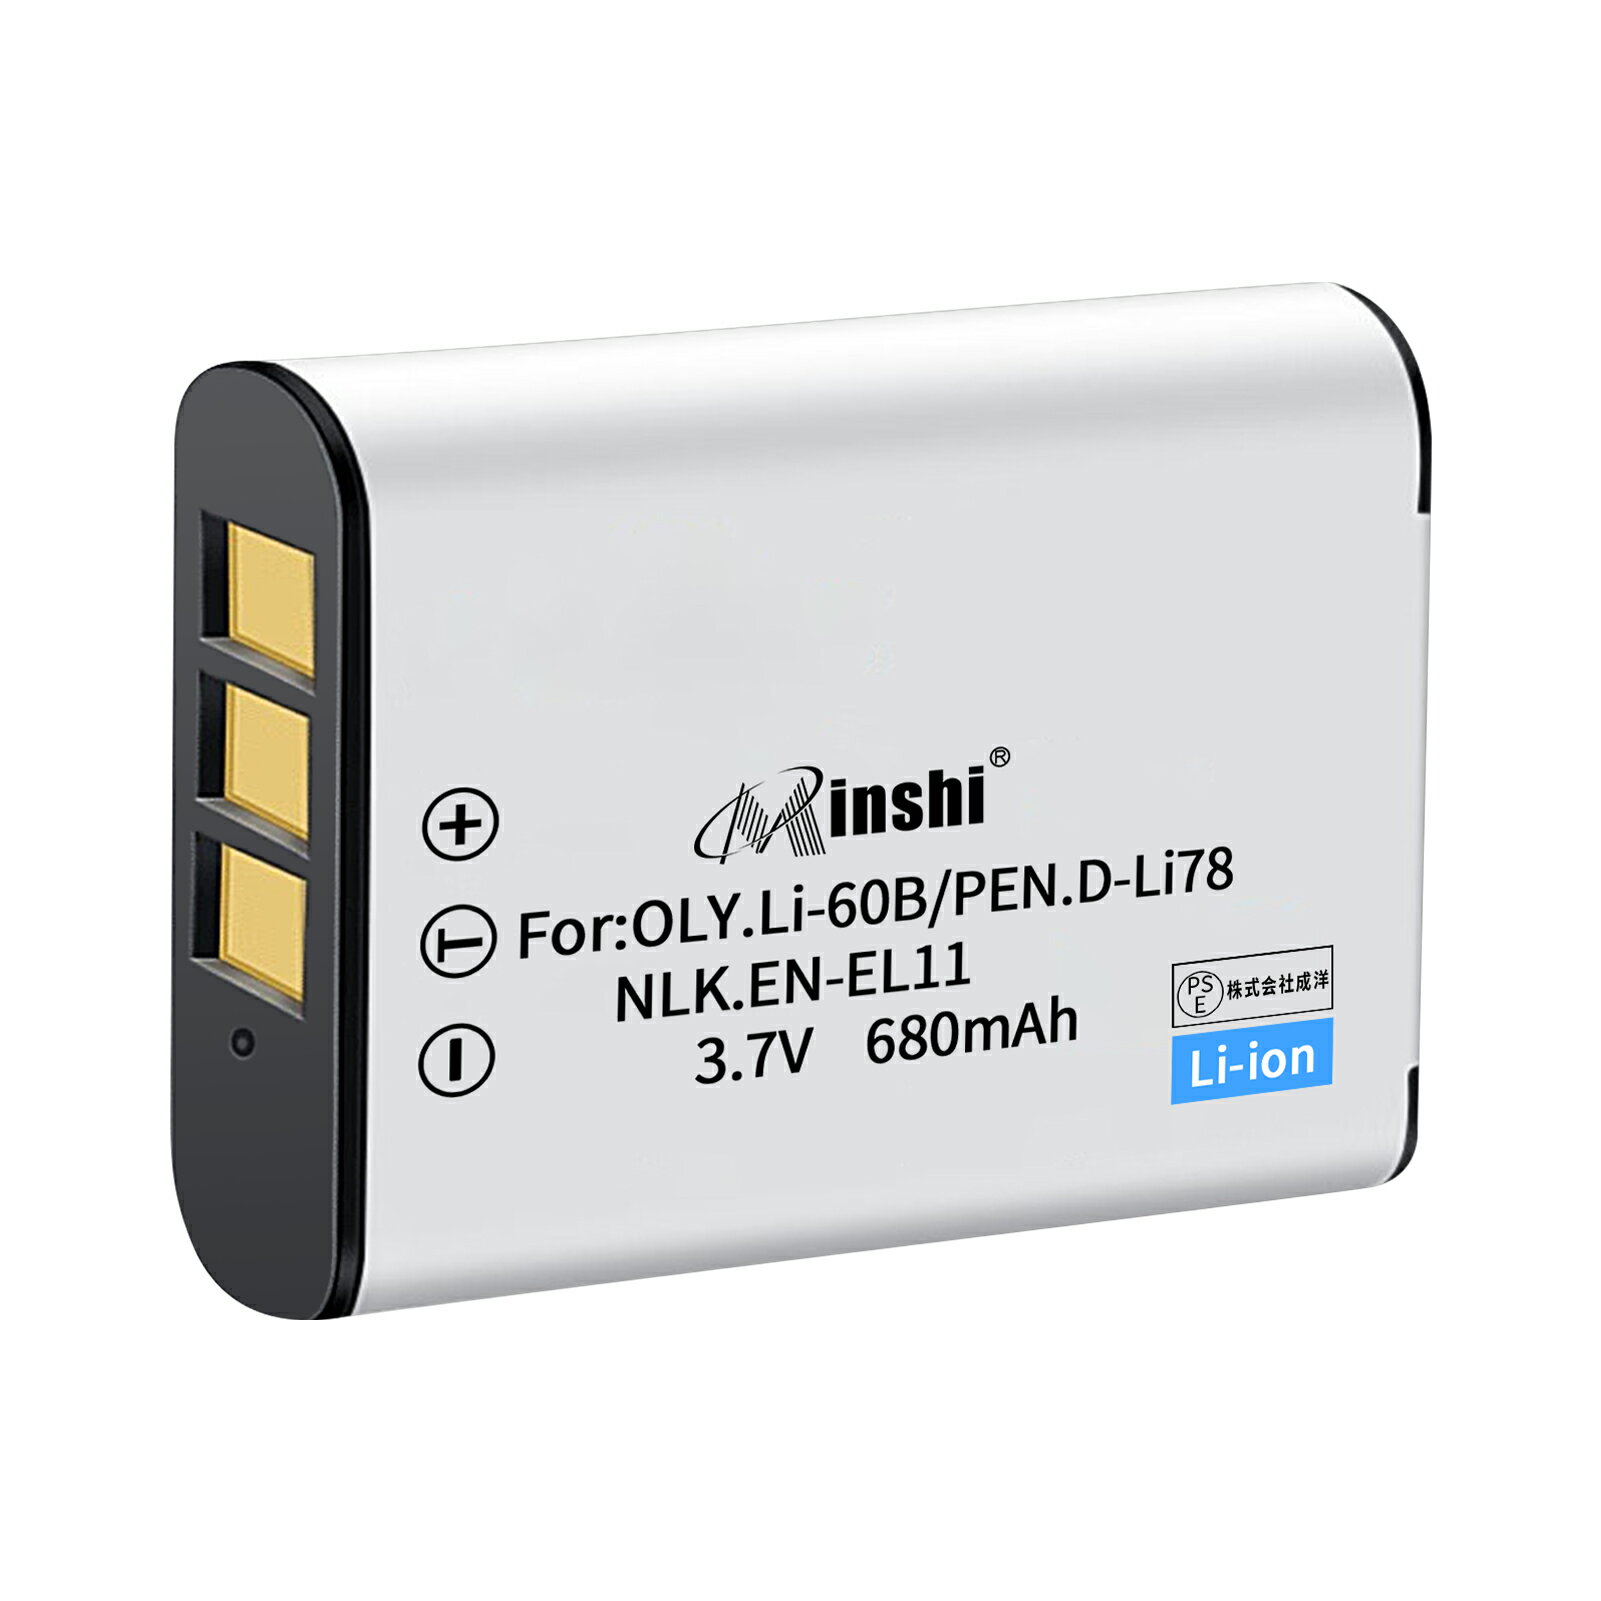 minshi 新品 NIKON Optio W60 互換バッテリー 680mAh 高品質交換用リチャージブル カメラバッテリー リチウムイオンバッテリー 充電池 PSE認証 1年間保証 オリジナル充電器との互換性がない 予備バッテリー